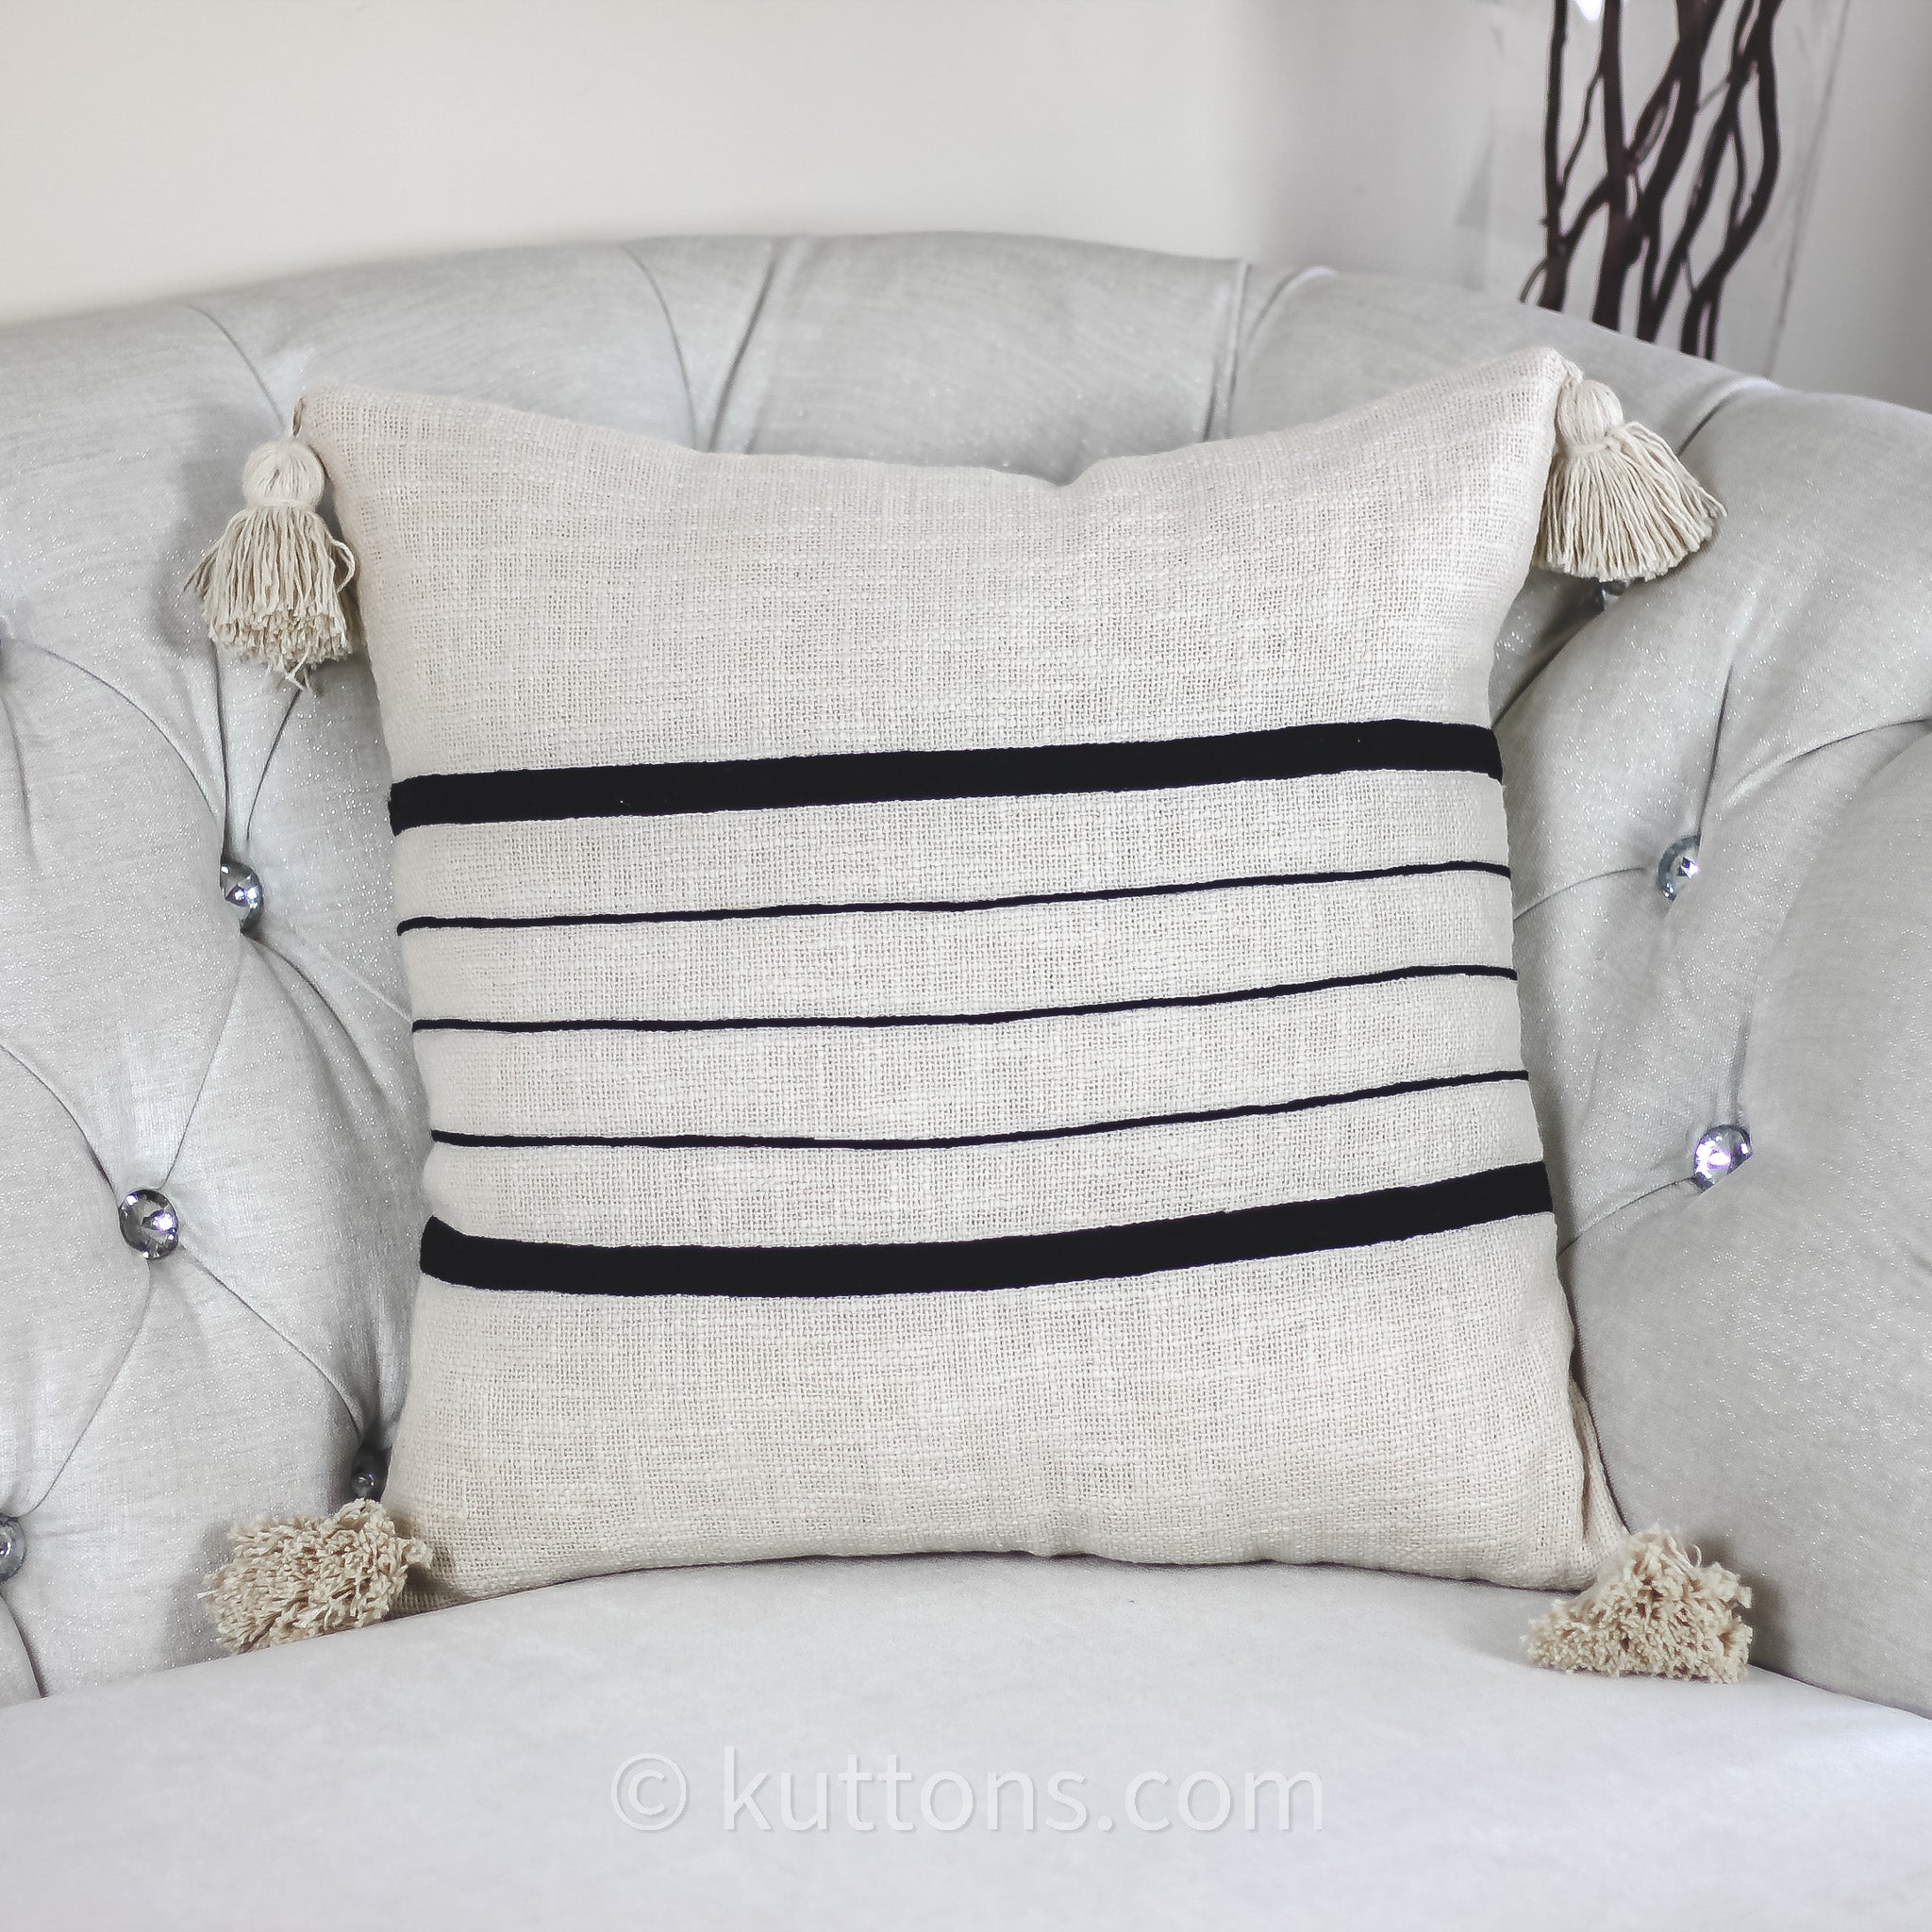 Handmade Textured Cotton Striped Pillow Cover - Corner Tassels